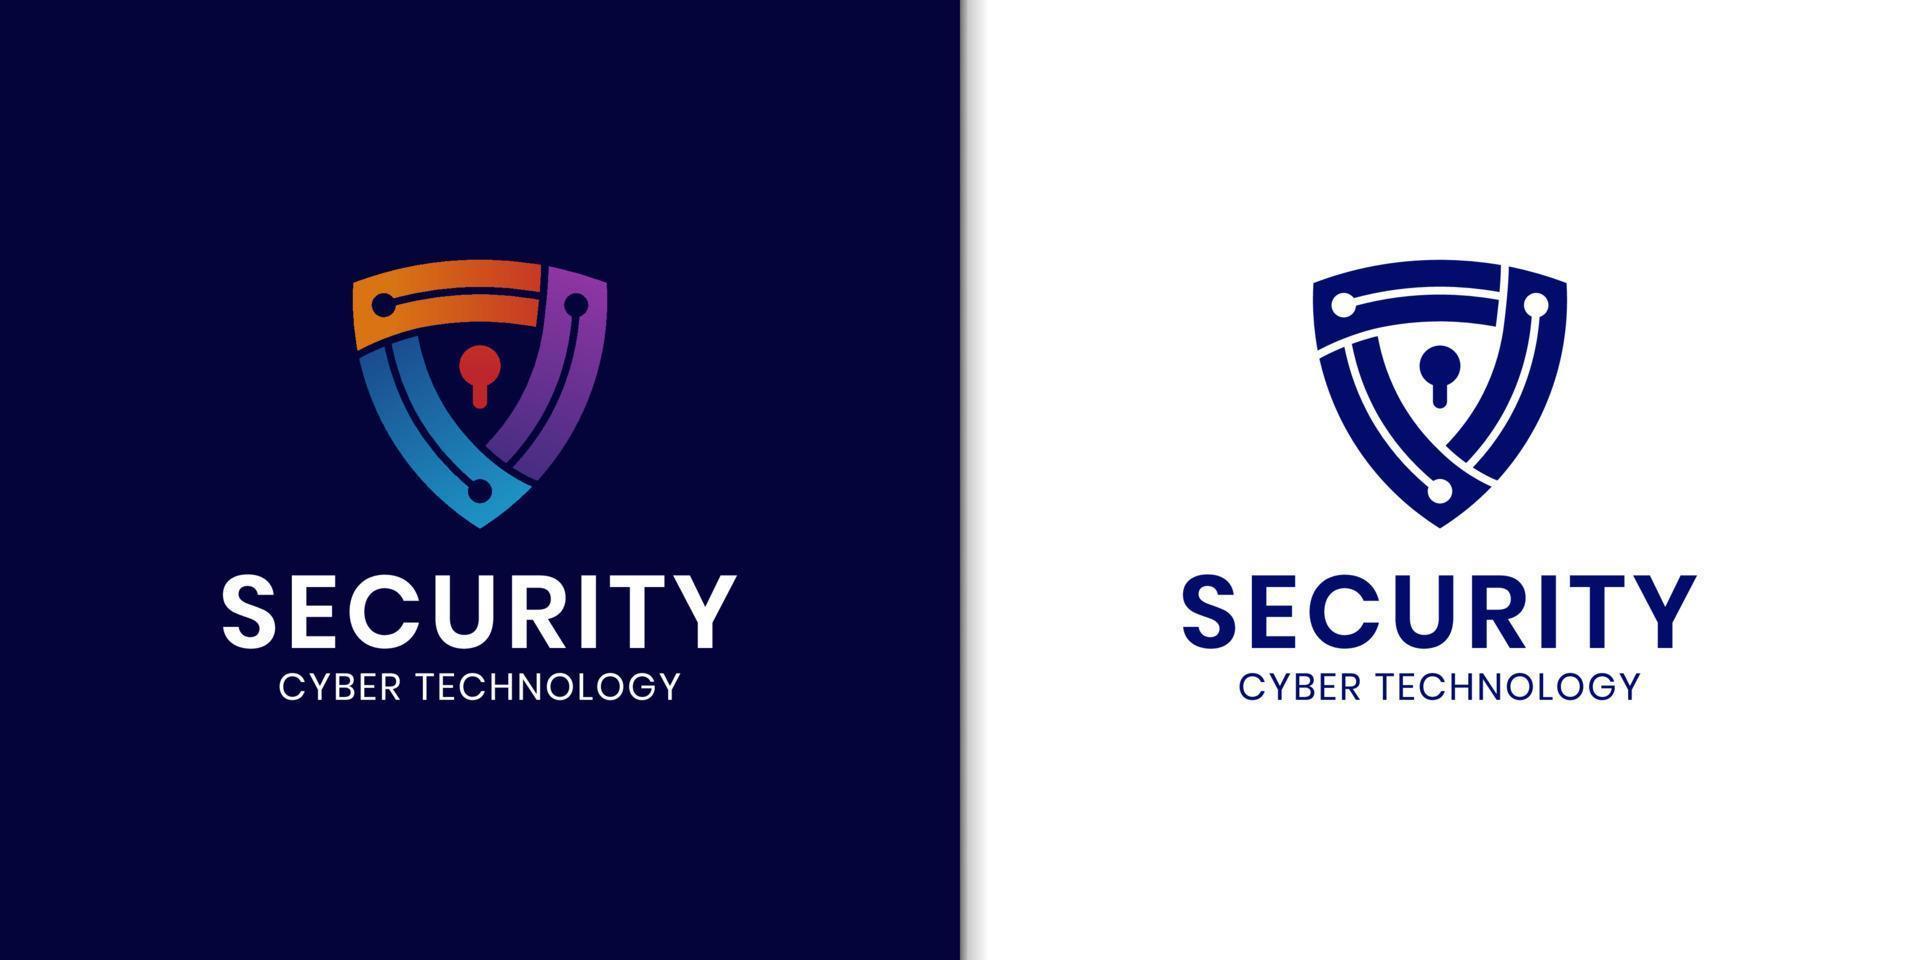 cyber defense shield logo for internet data security design vector